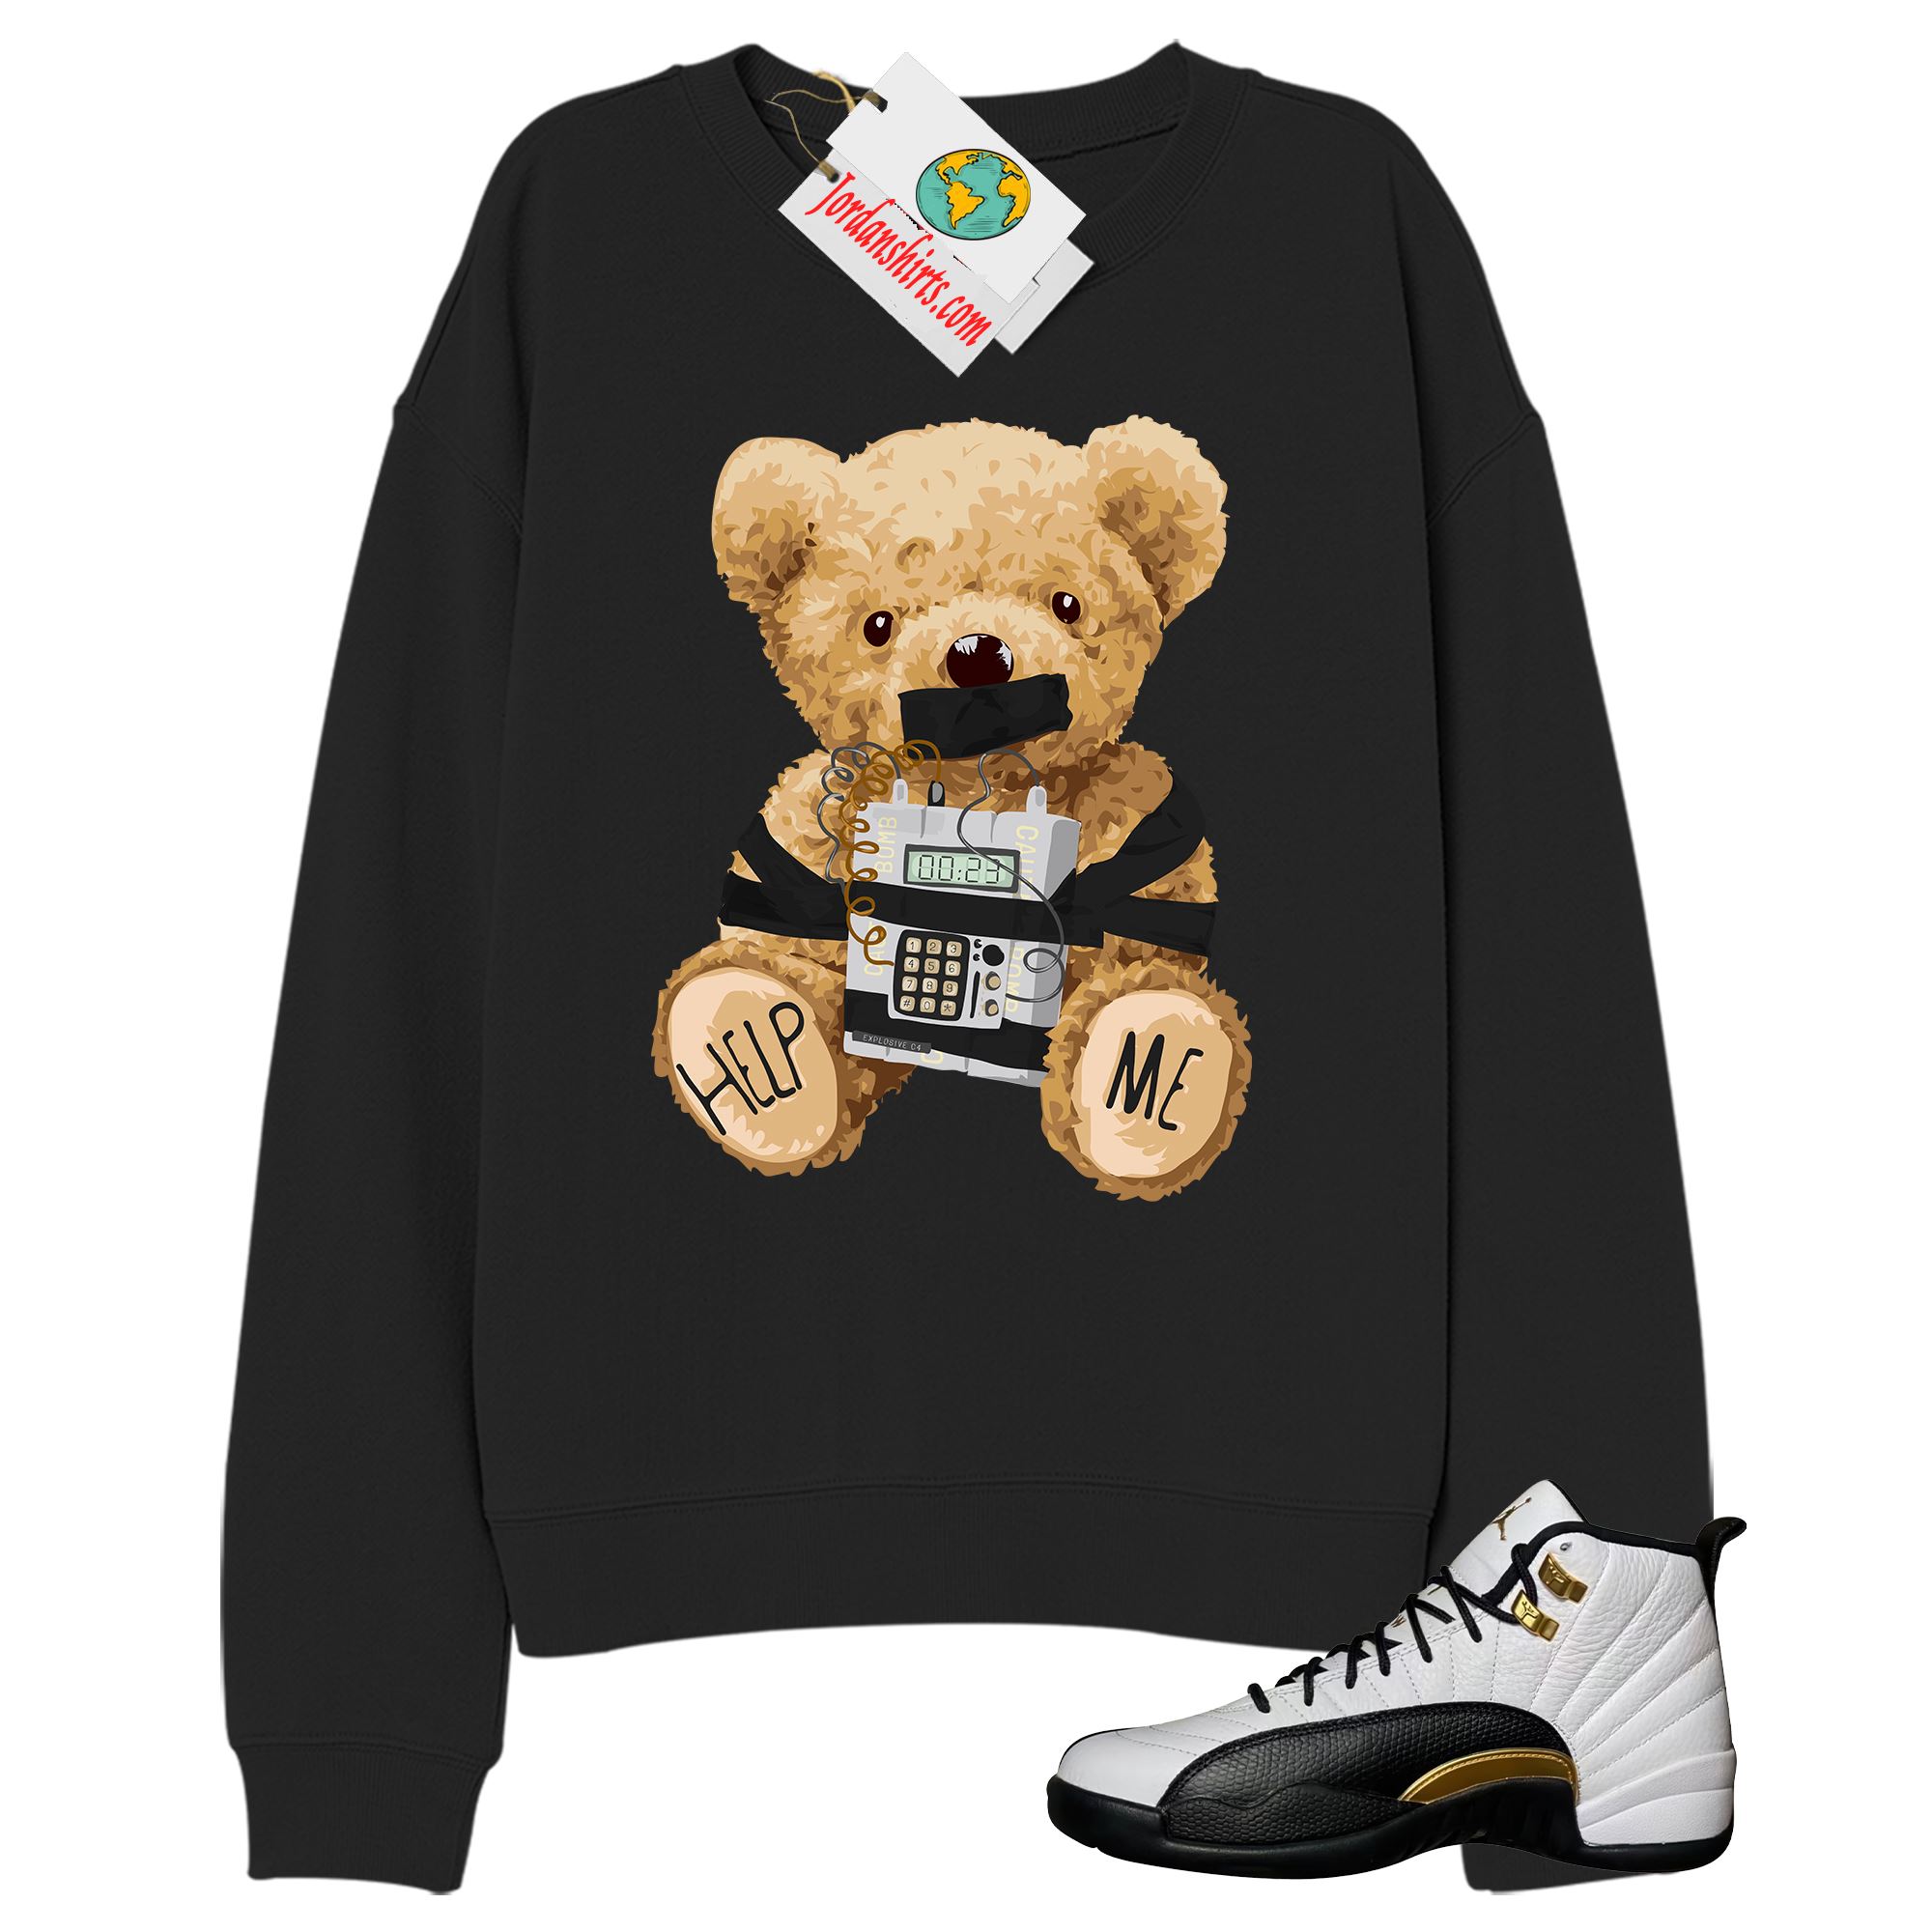 Jordan 12 Sweatshirt, Teddy Bear Bomb Black Sweatshirt Air Jordan 12 Royalty 12s Full Size Up To 5xl